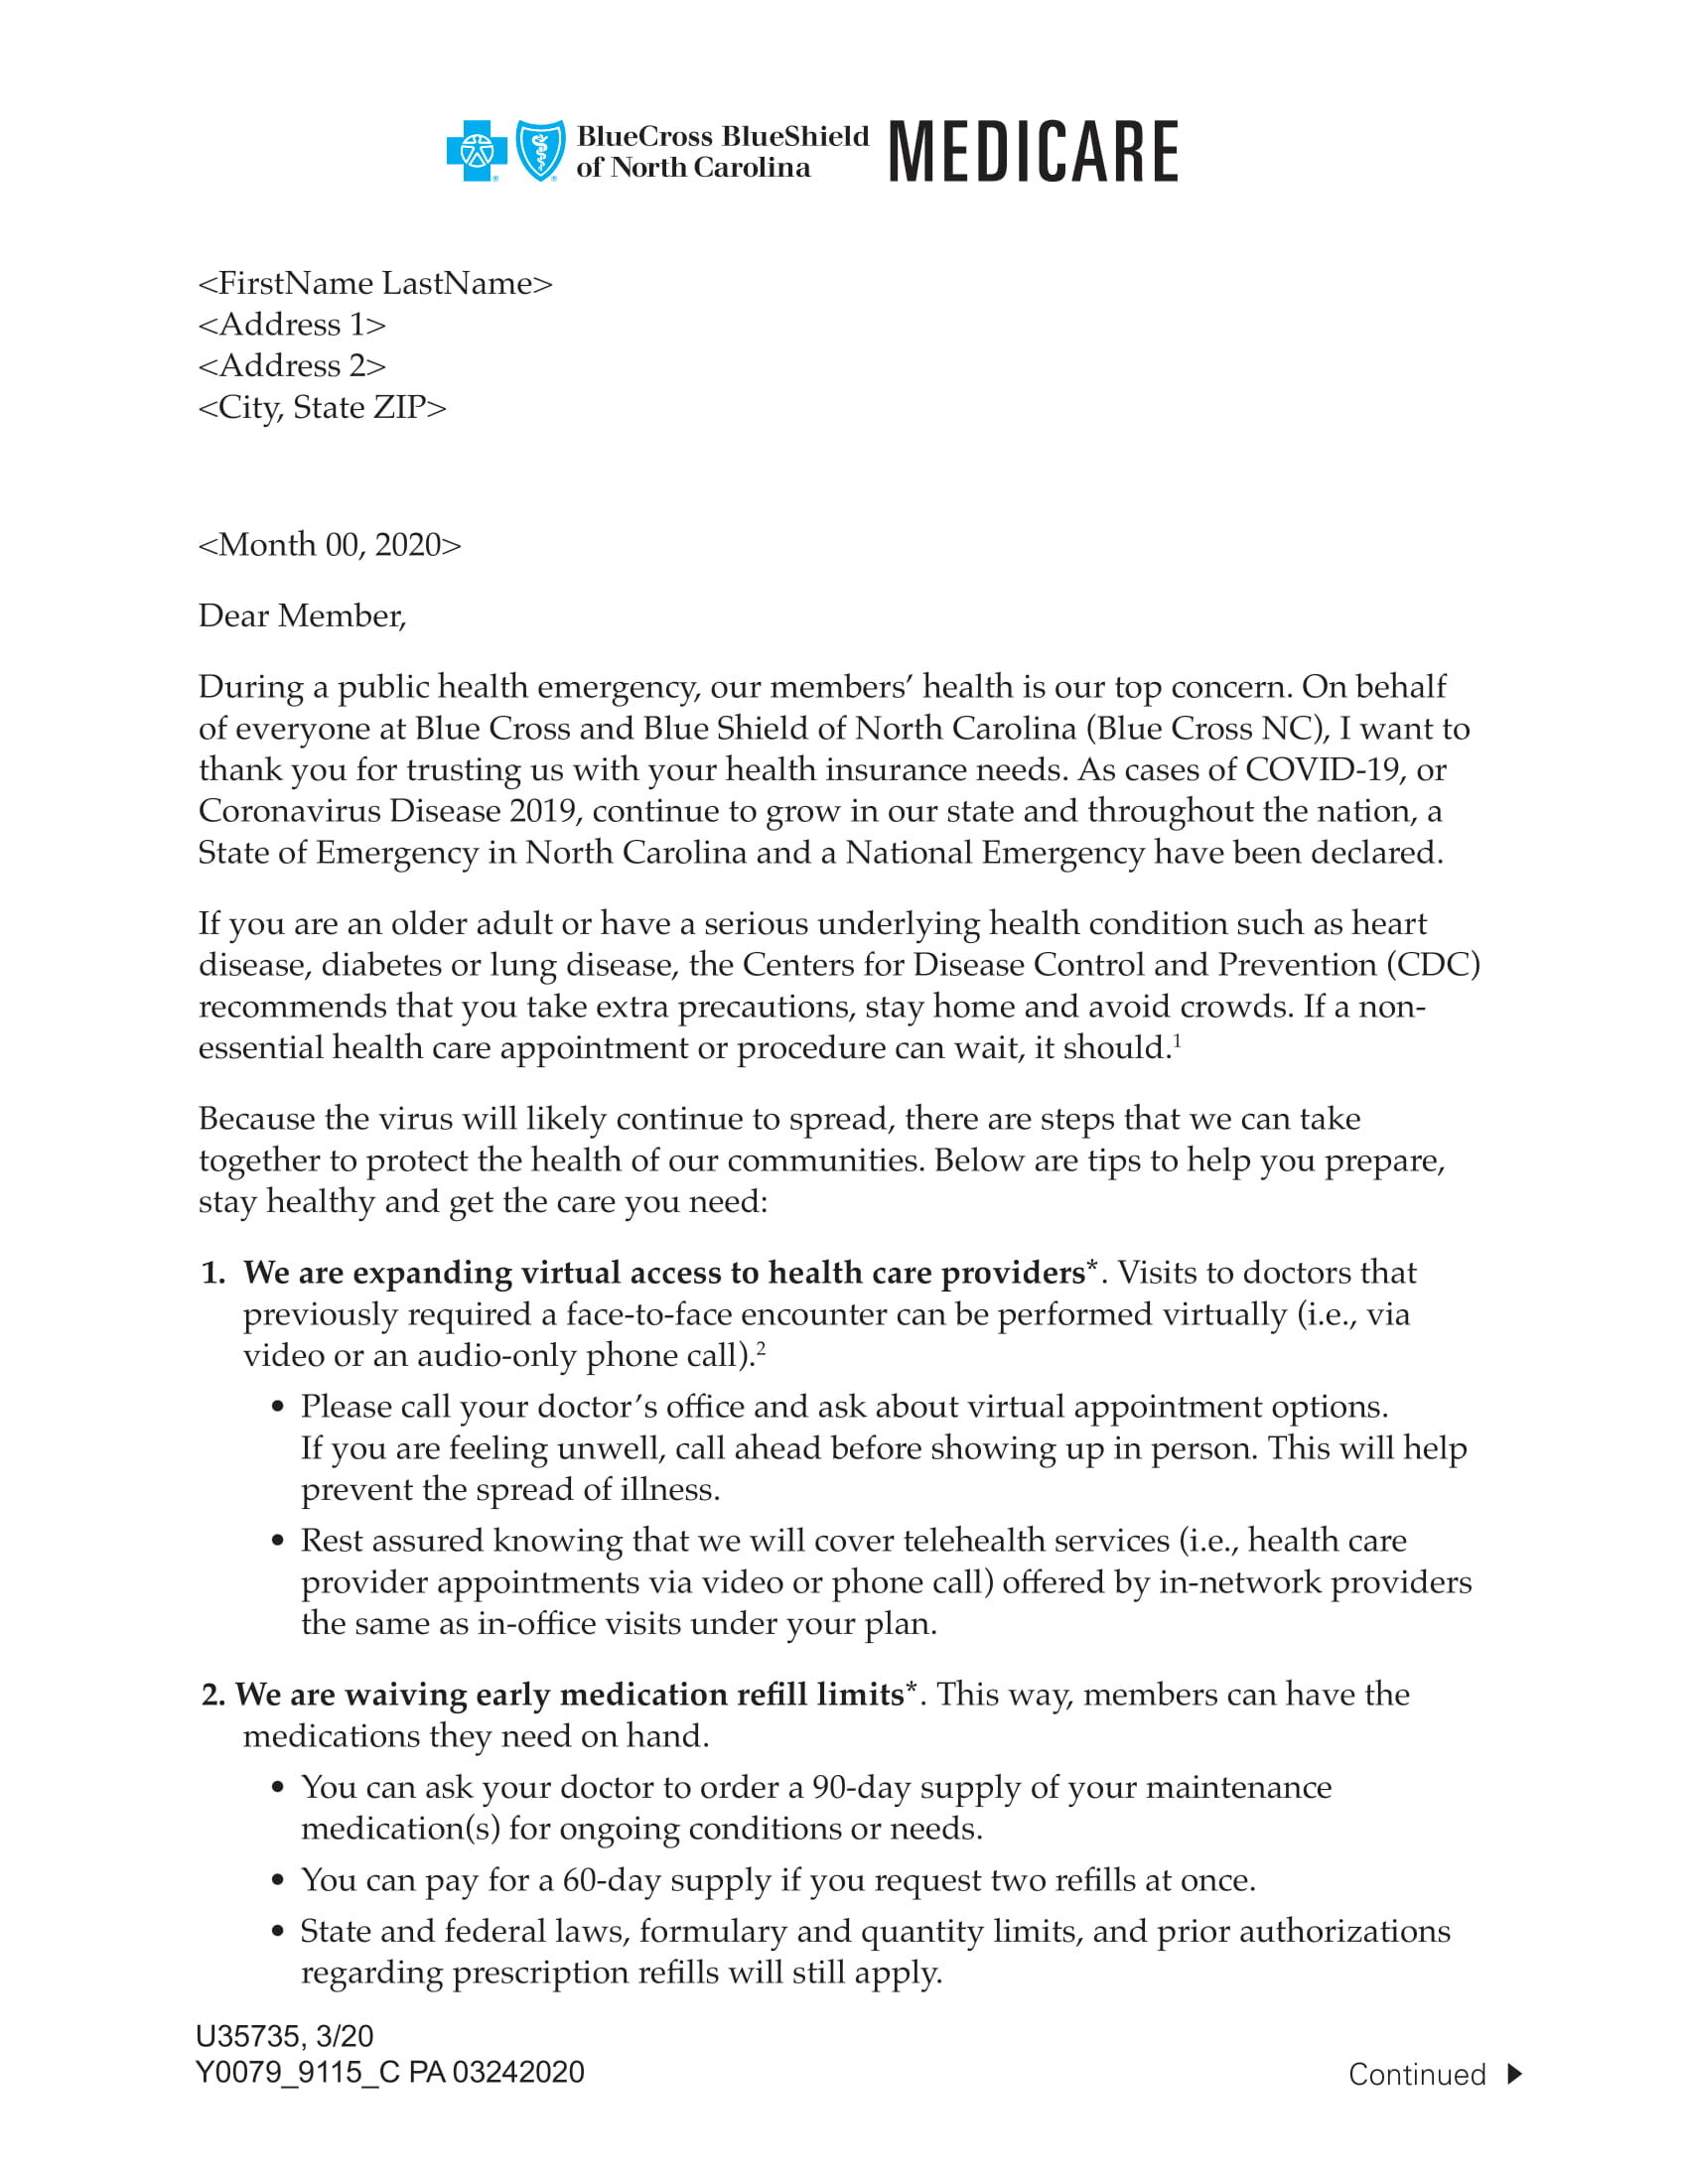 U35735 - Coronavirus Medicare Letter final-1.jpg